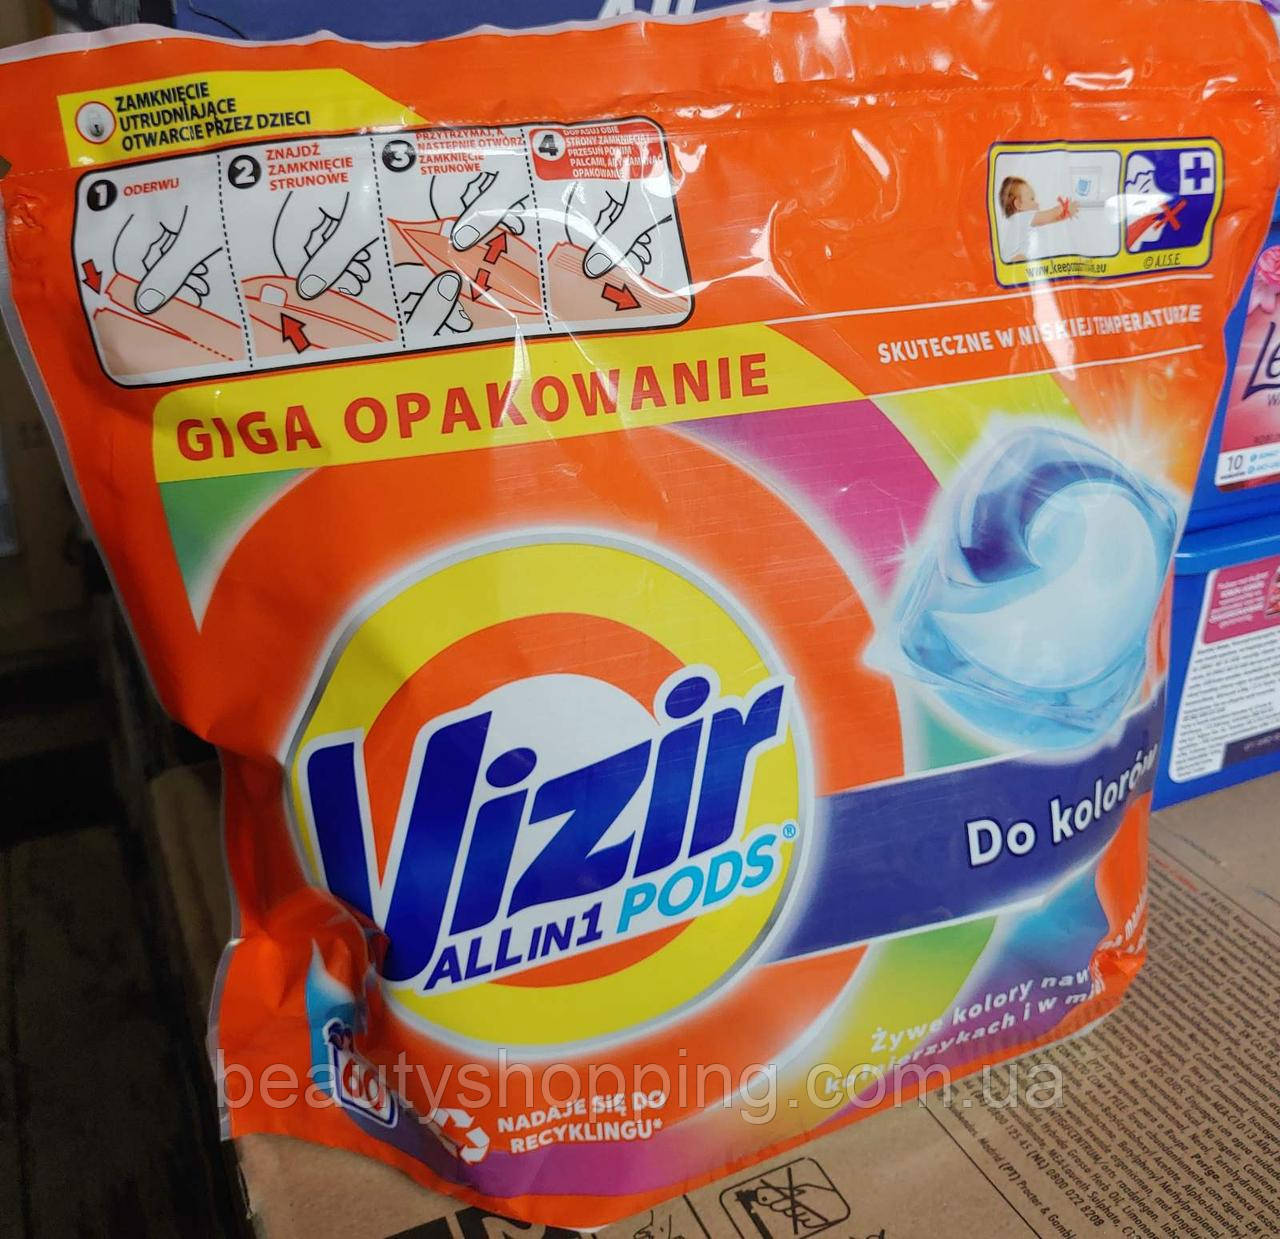 Vizir Pods Do Kolorow Color Allin1 Візір капсули для прання кольорових речей 60 штук Giga Pack